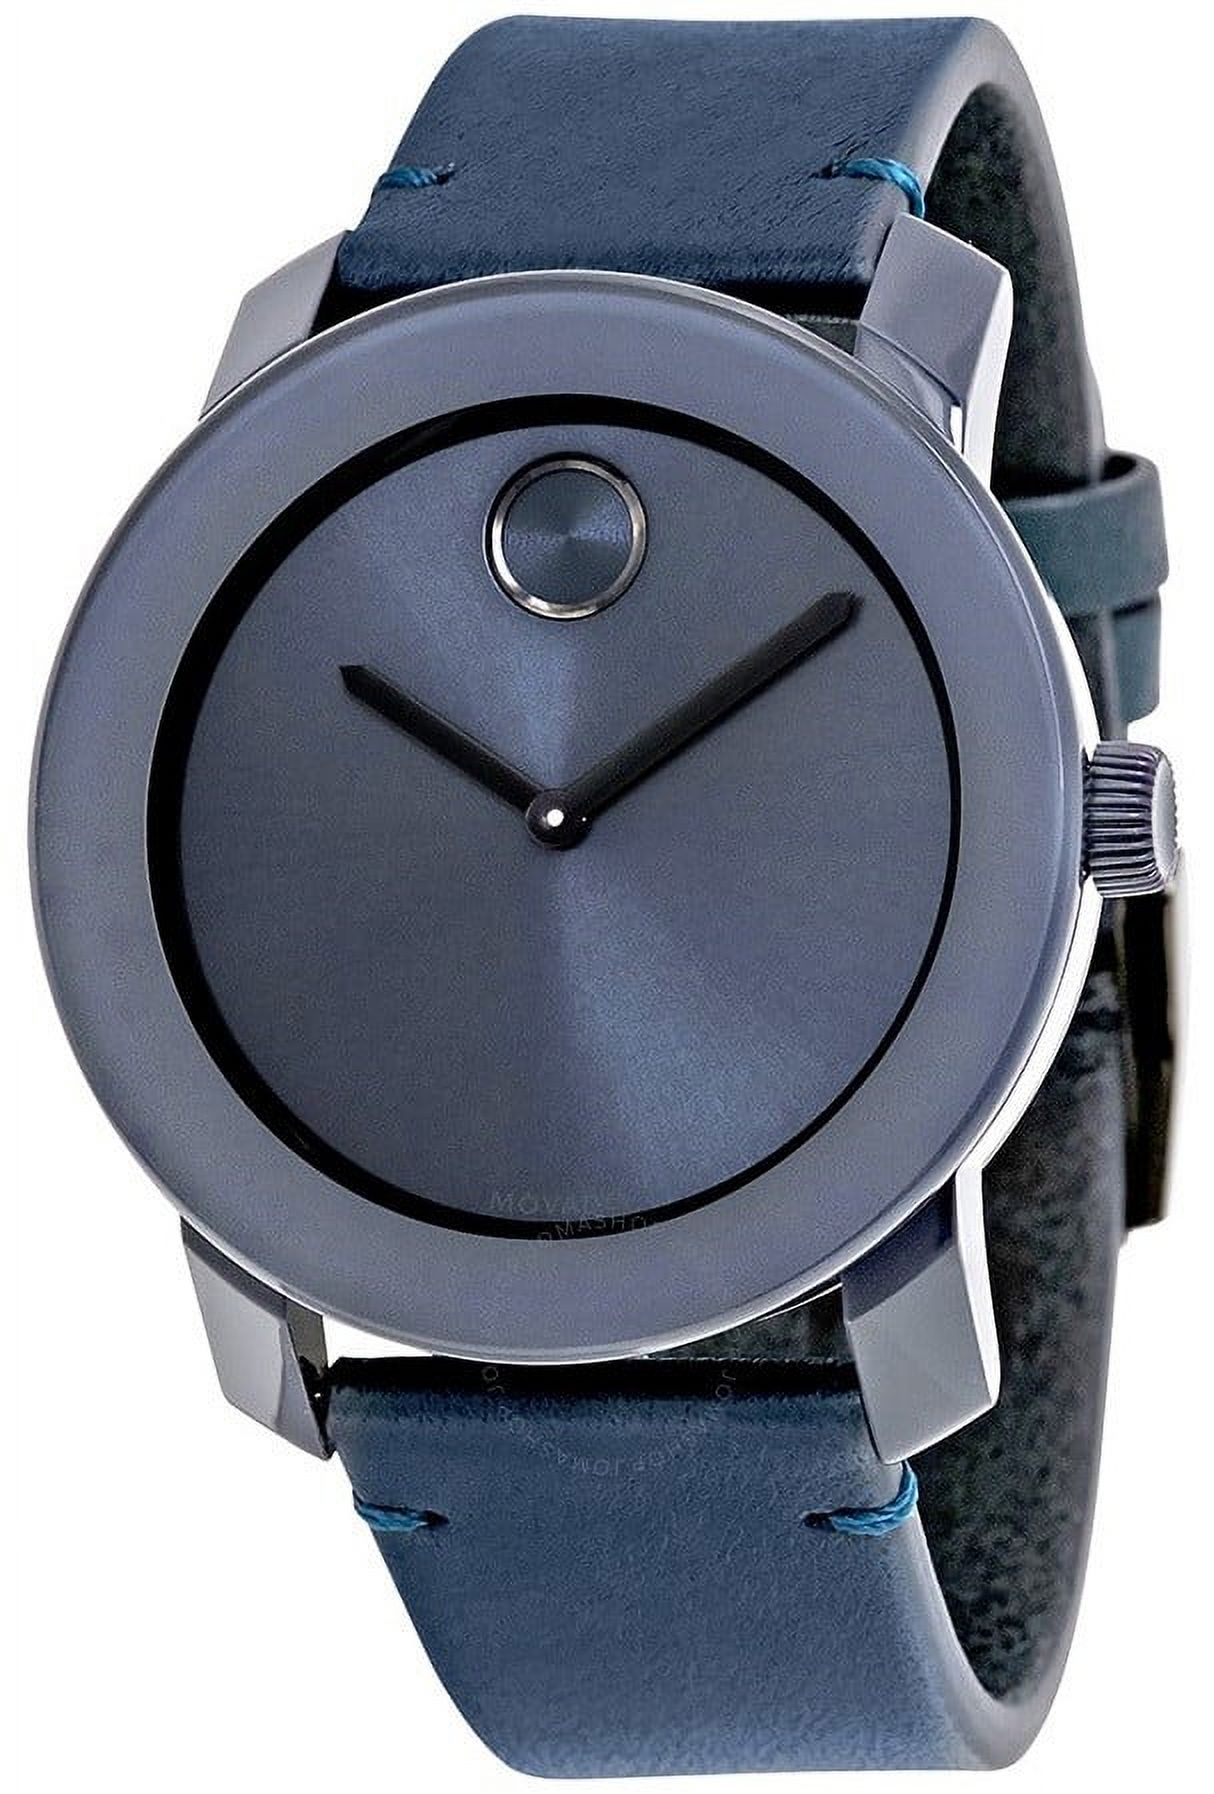 Movado Men's Bold Large Analog Quartz 42mm Watch 3600370 - image 1 of 4